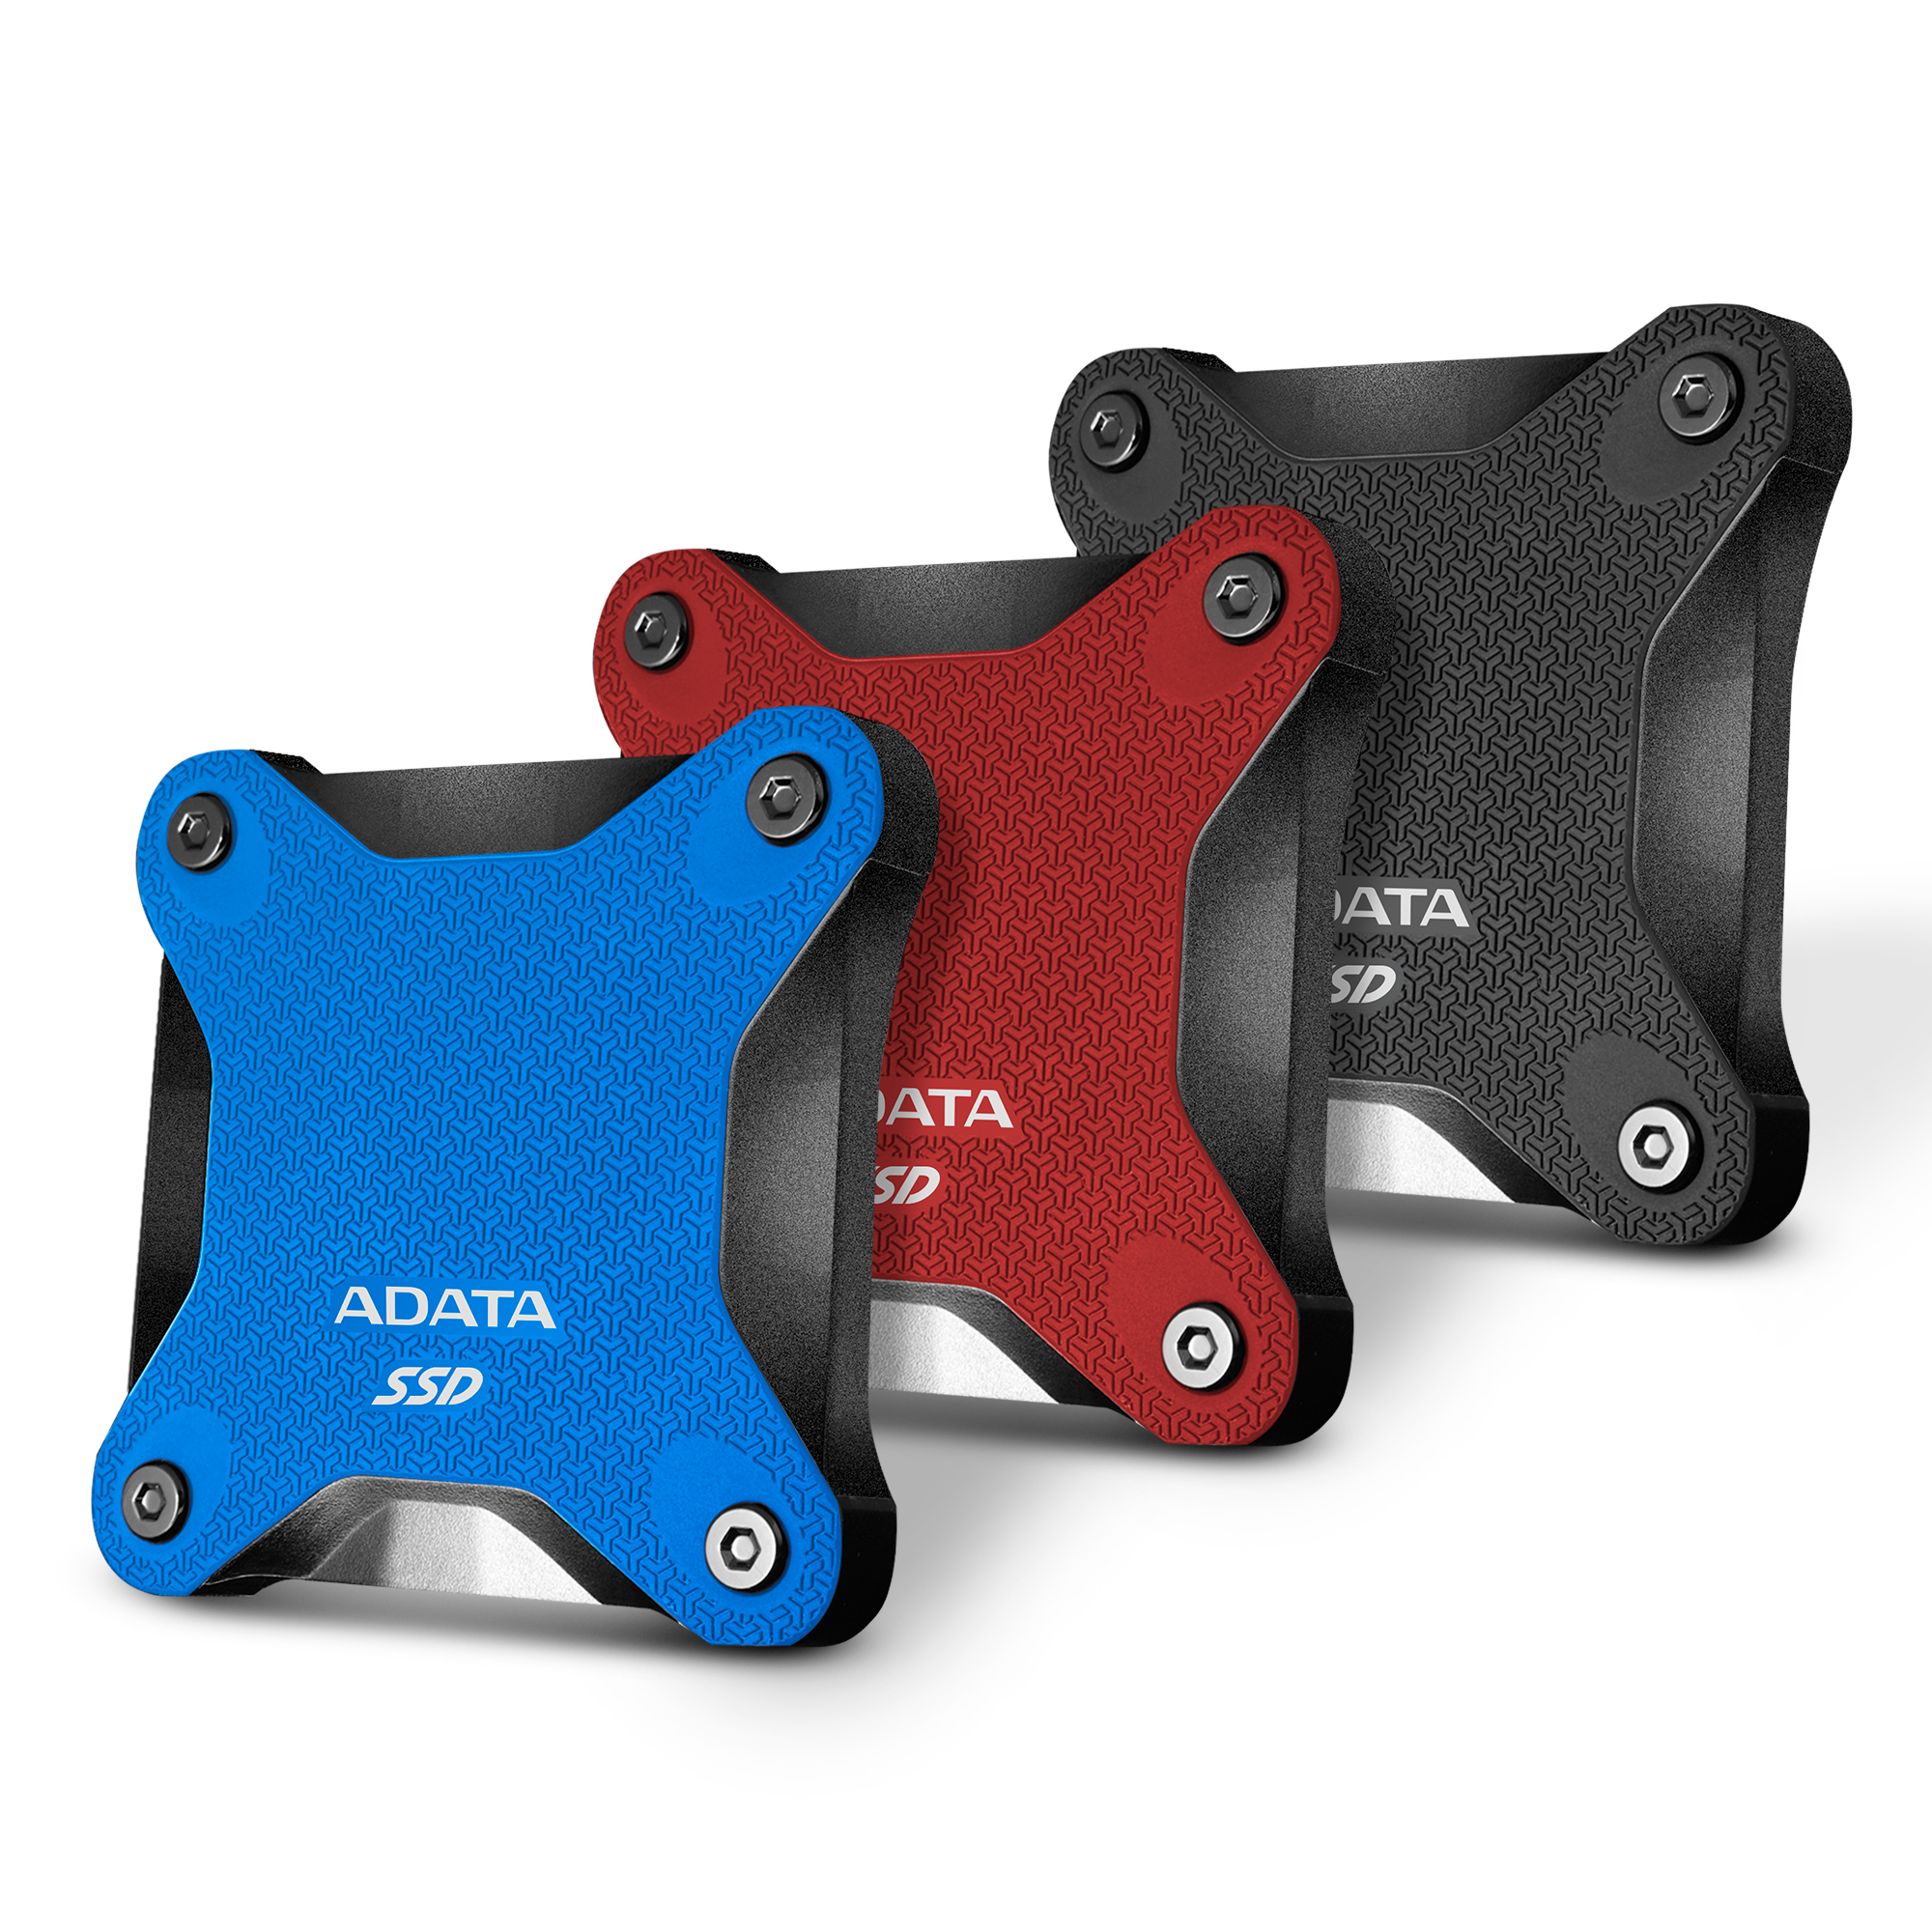 ADATA meluncurkan SD600Q eksternal solid state drive